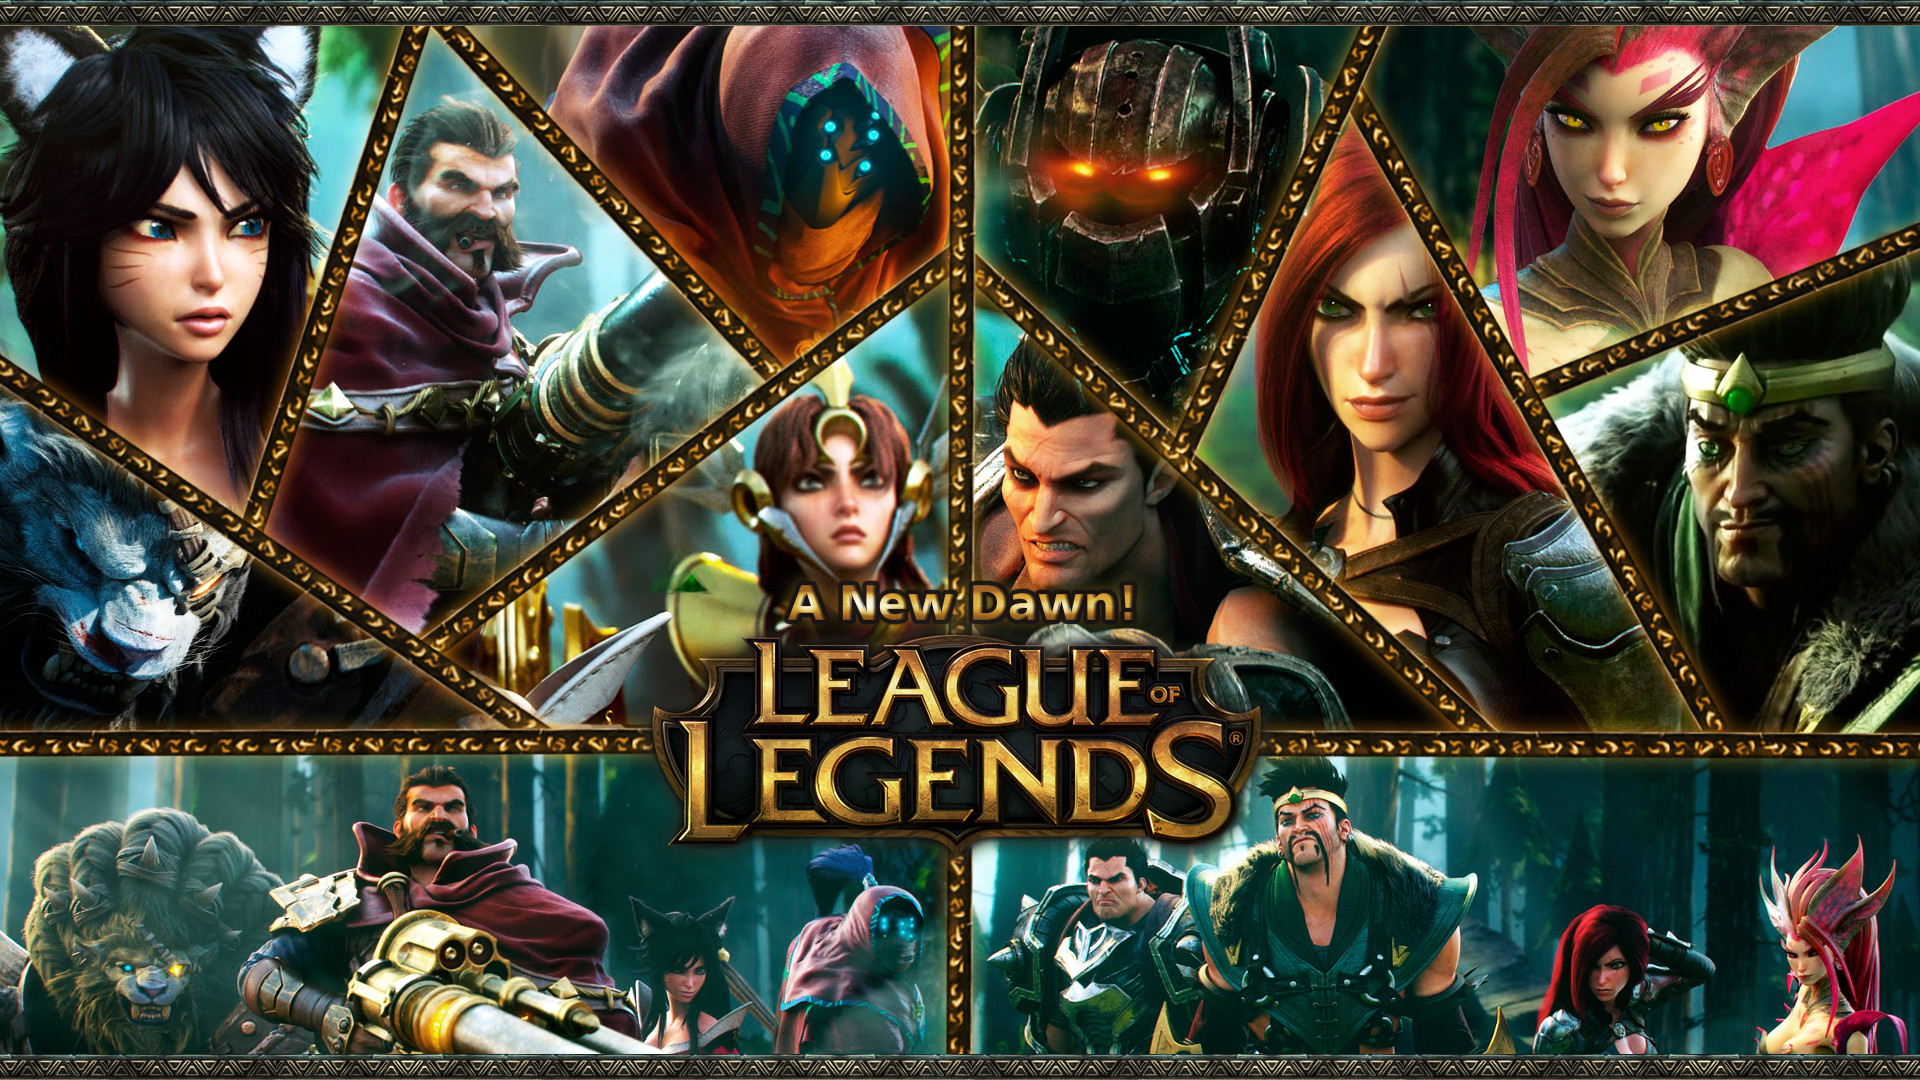 1920x1080 League of Legends Wallpaper HD : Find best latest League of Legends  Wallpaper HD for your